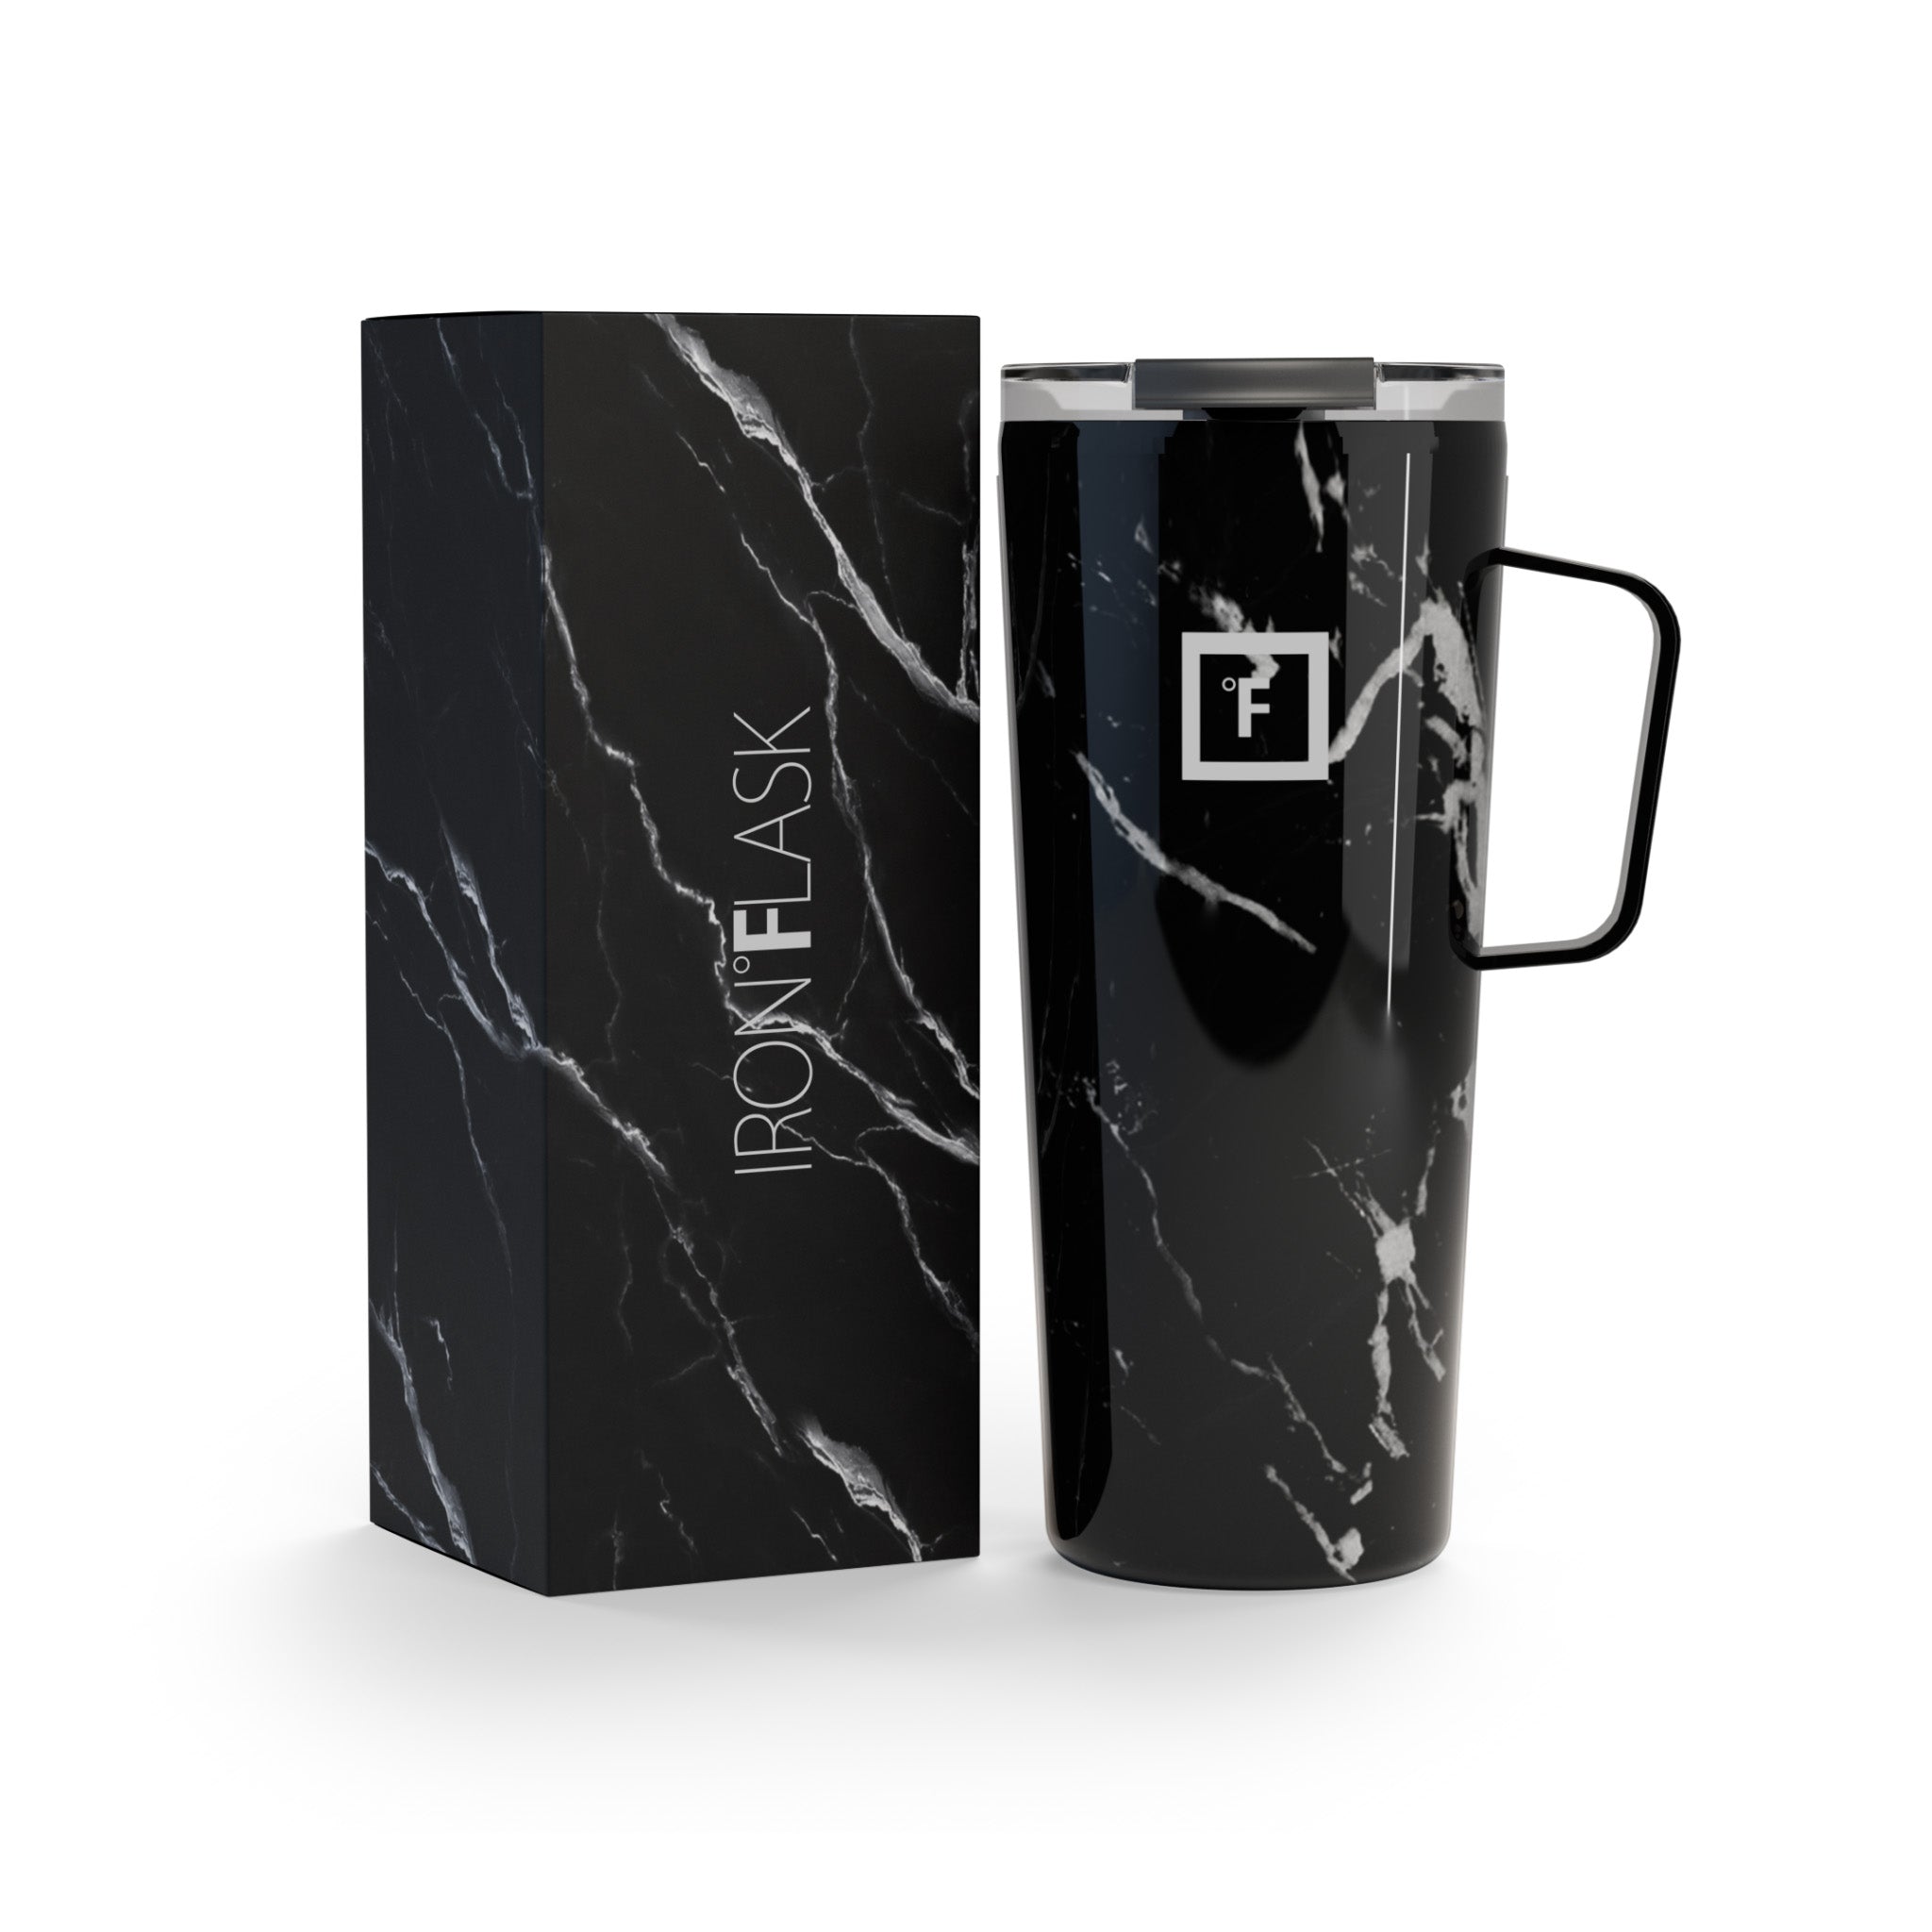 Iron Flask 16oz Stainless Steel Coffee Mug : Target